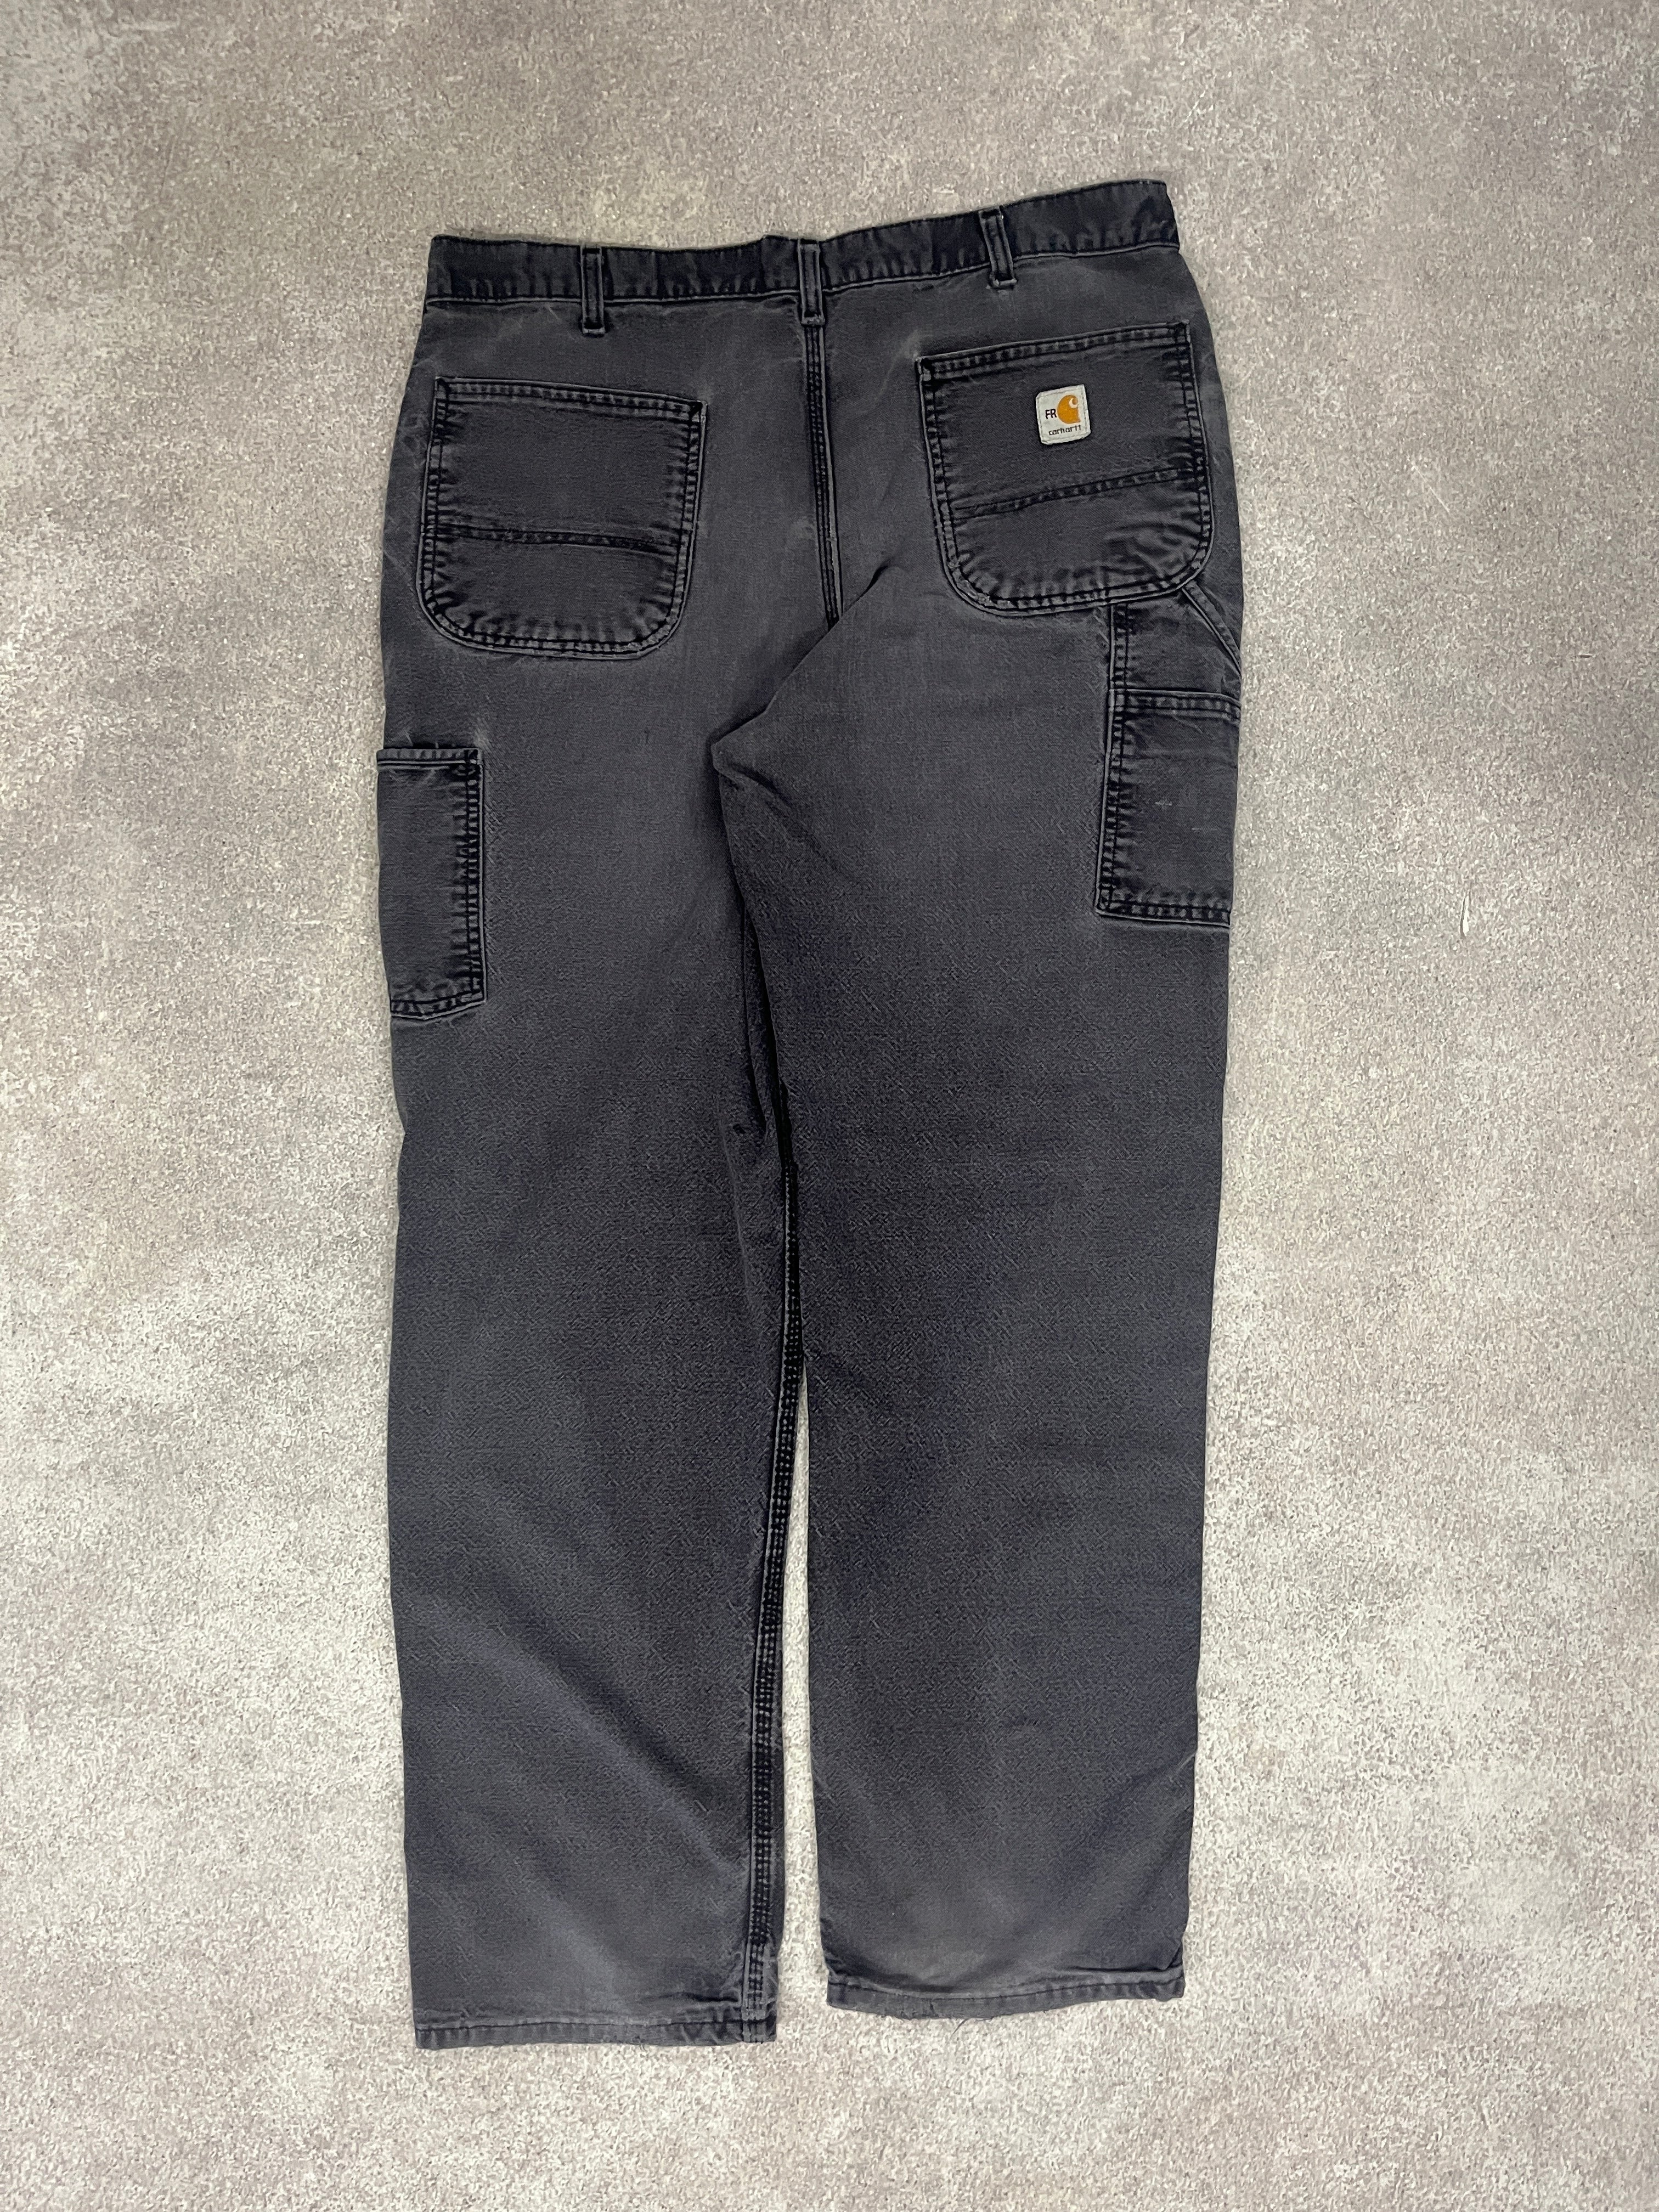 Vintage Carhartt Carpenter Pants Black // W38 L32 - RHAGHOUSE VINTAGE